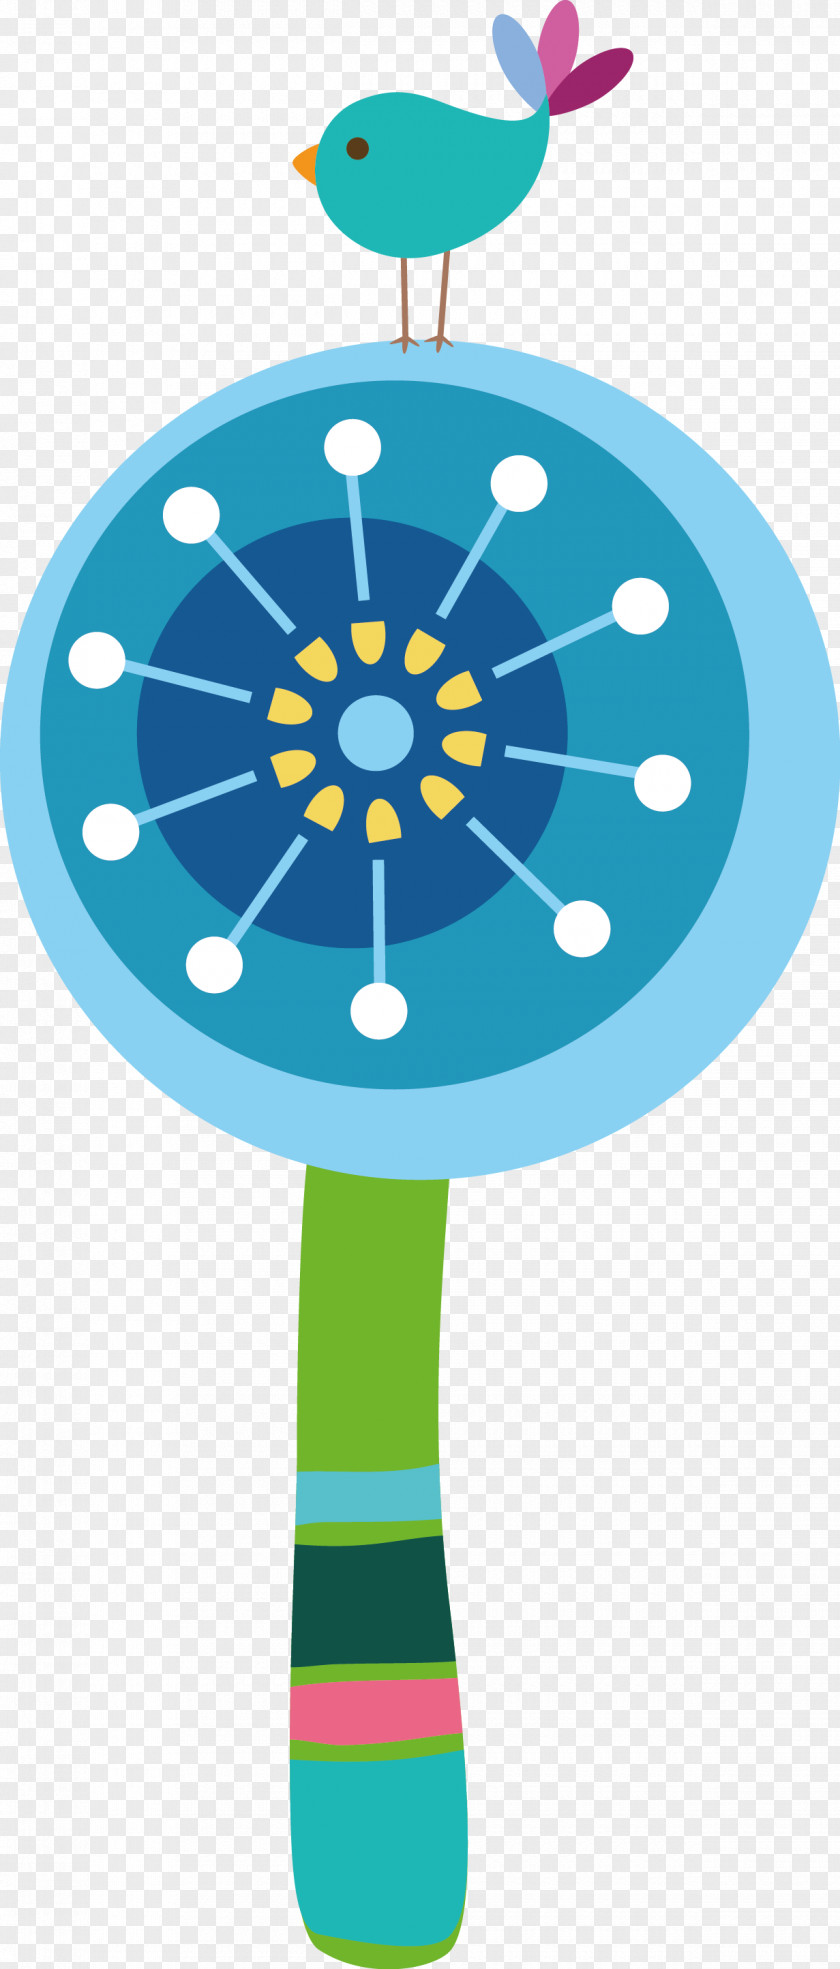 Lollipop Vector Baby Rattle Illustration PNG